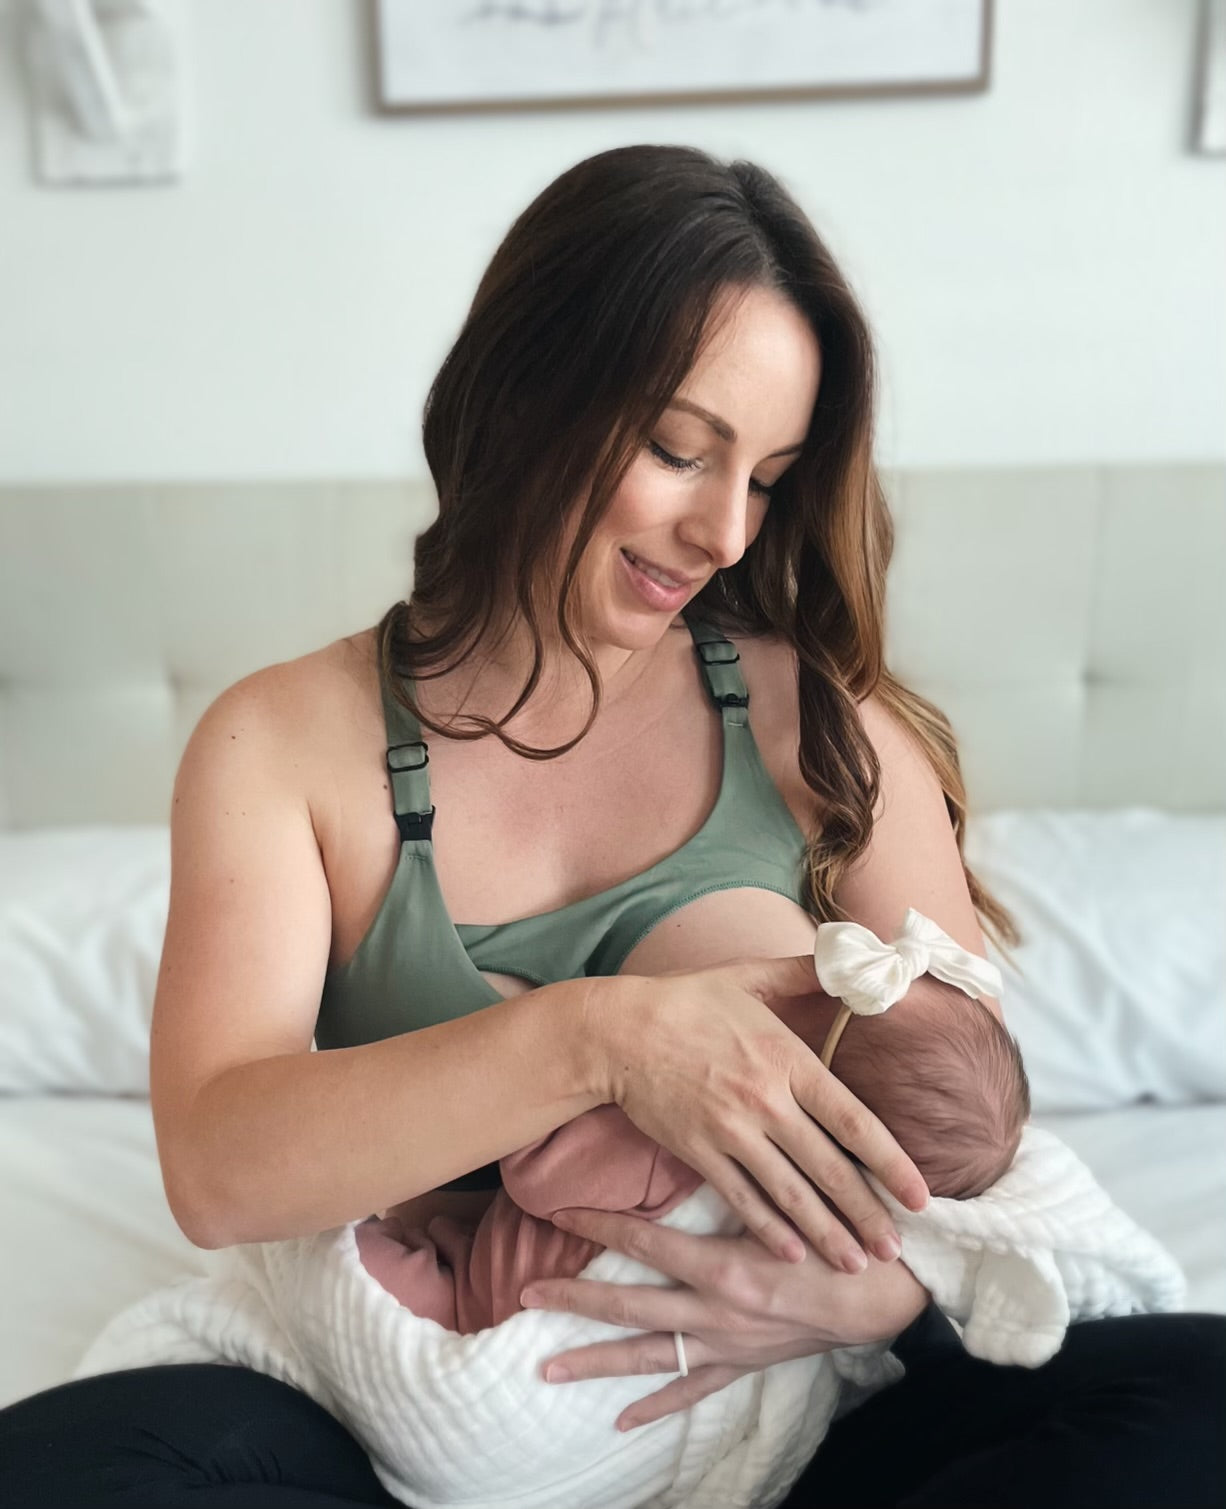 Mammae nursing bra - Nursing bras - Feeding